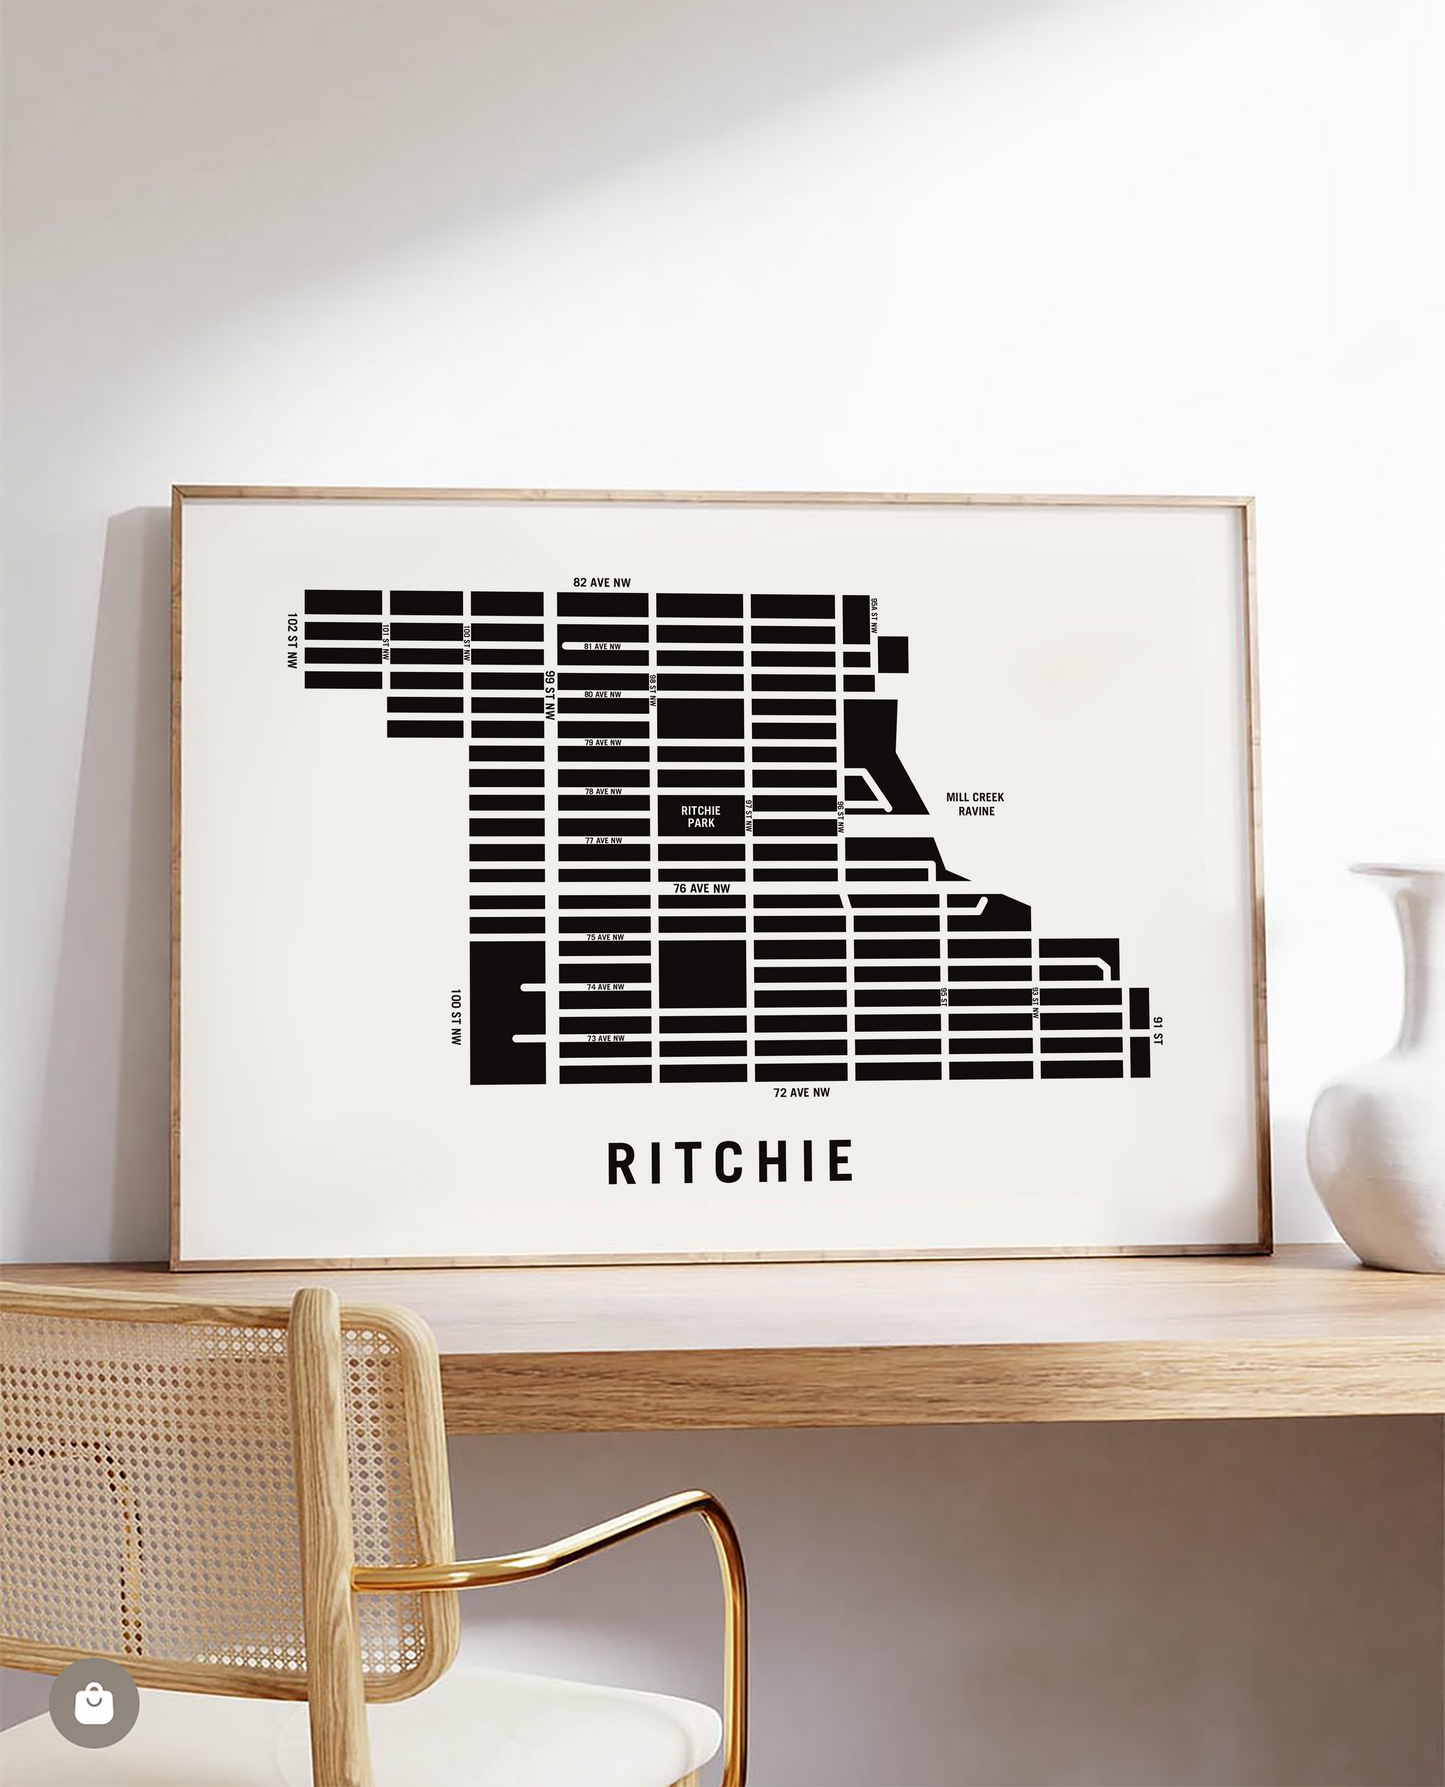 Ritchie Map, Edmonton